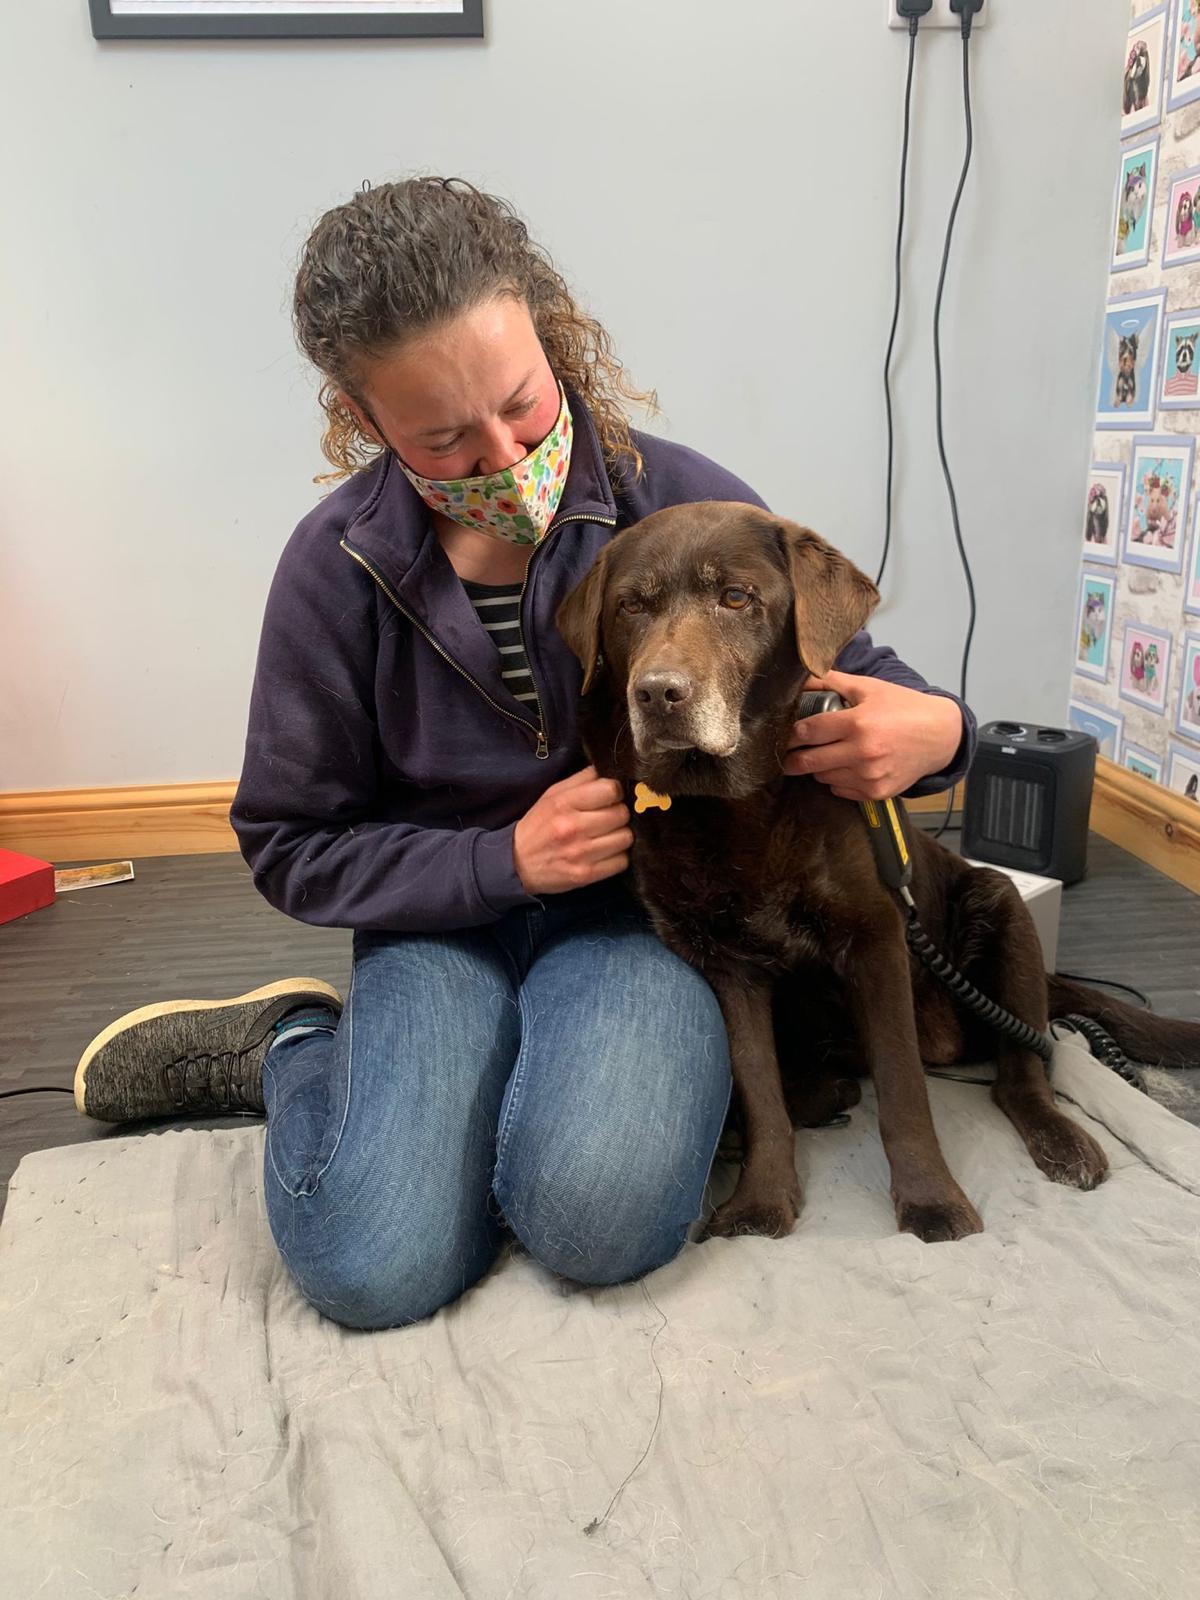 sophie pickard animal phsiotherapist giving laser treatment to a senior chocolate labrador dog 